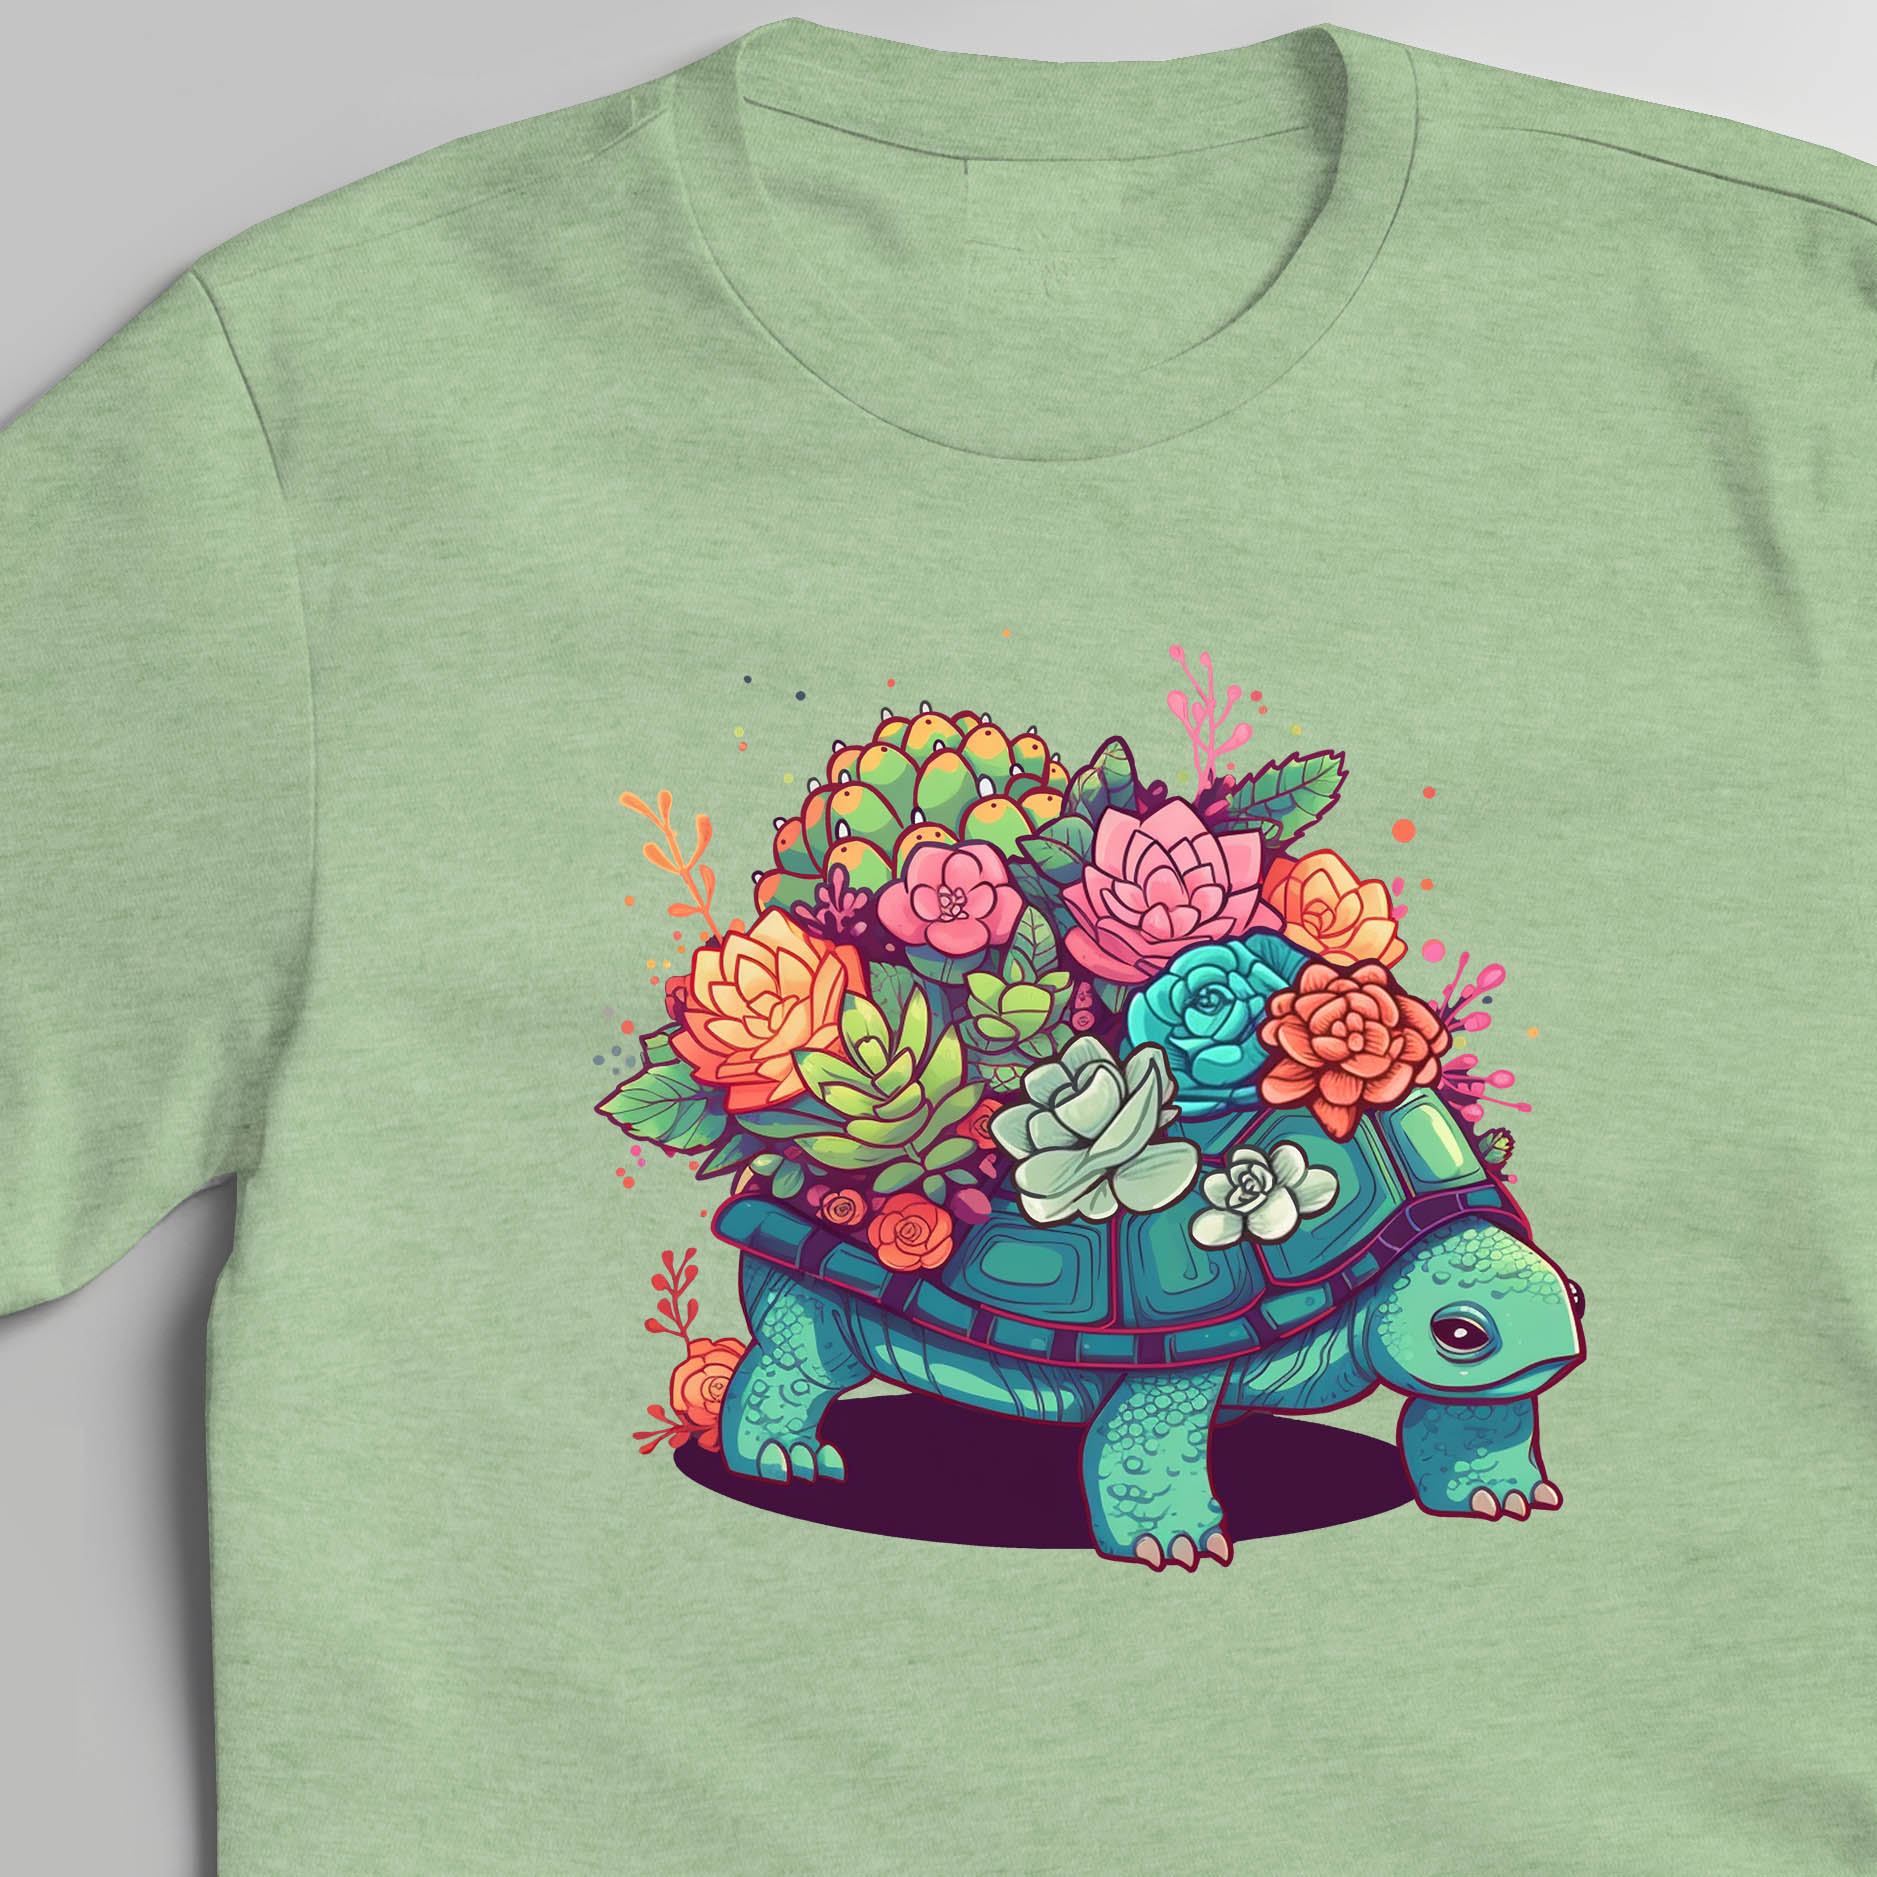 Succulent Turtle T-shirt - My Little Garden - Heather Green